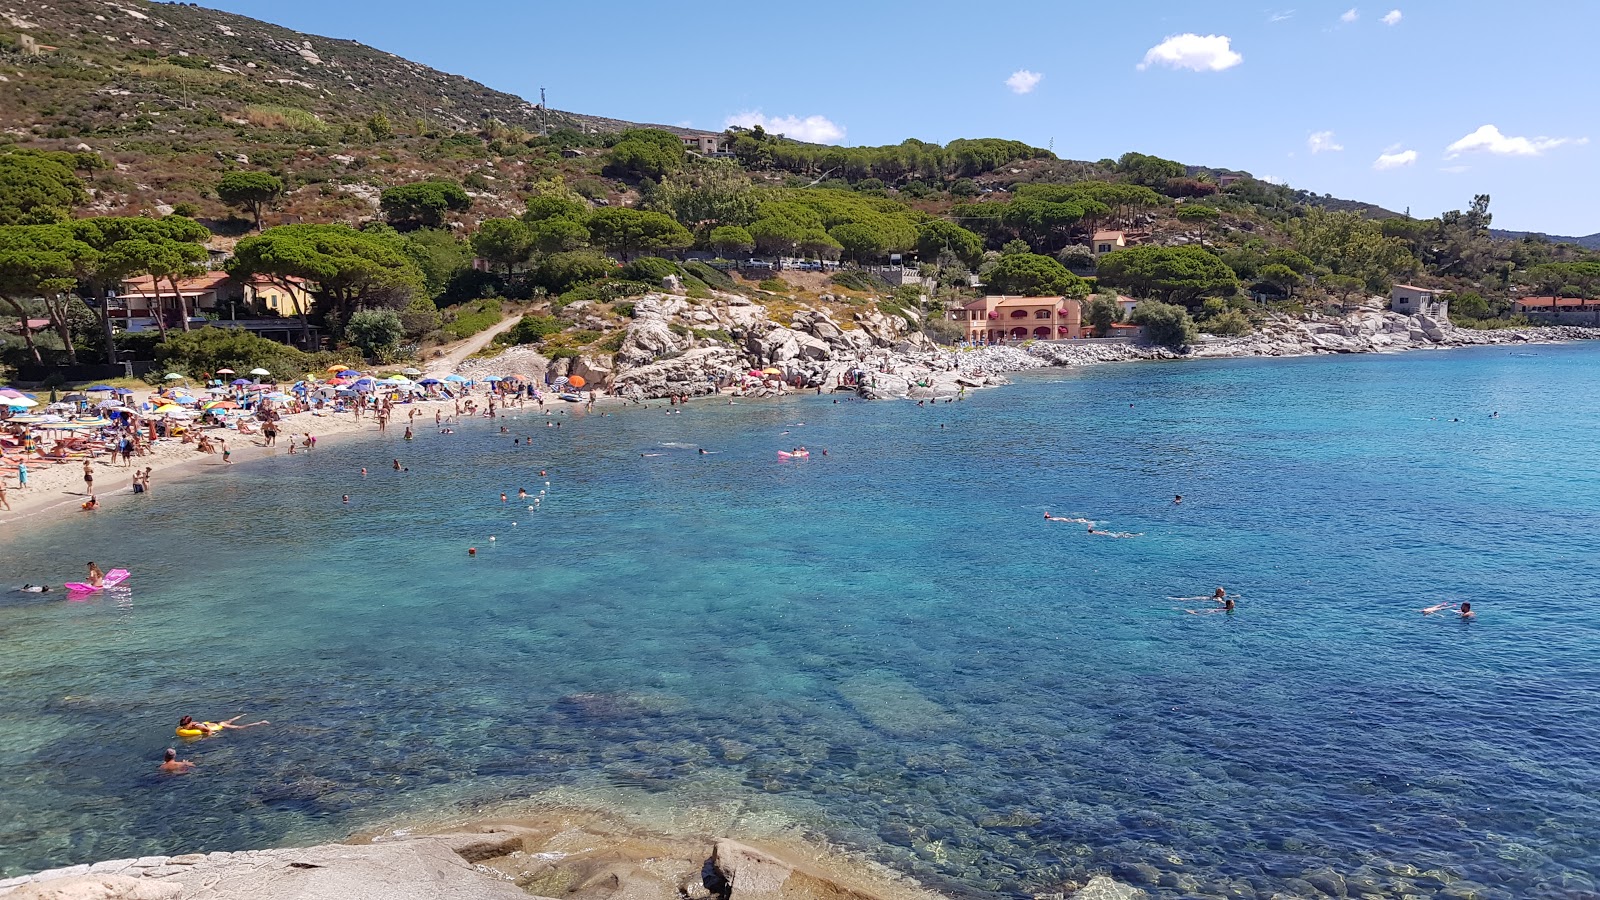 Photo of Spiaggia di Seccheto with turquoise pure water surface